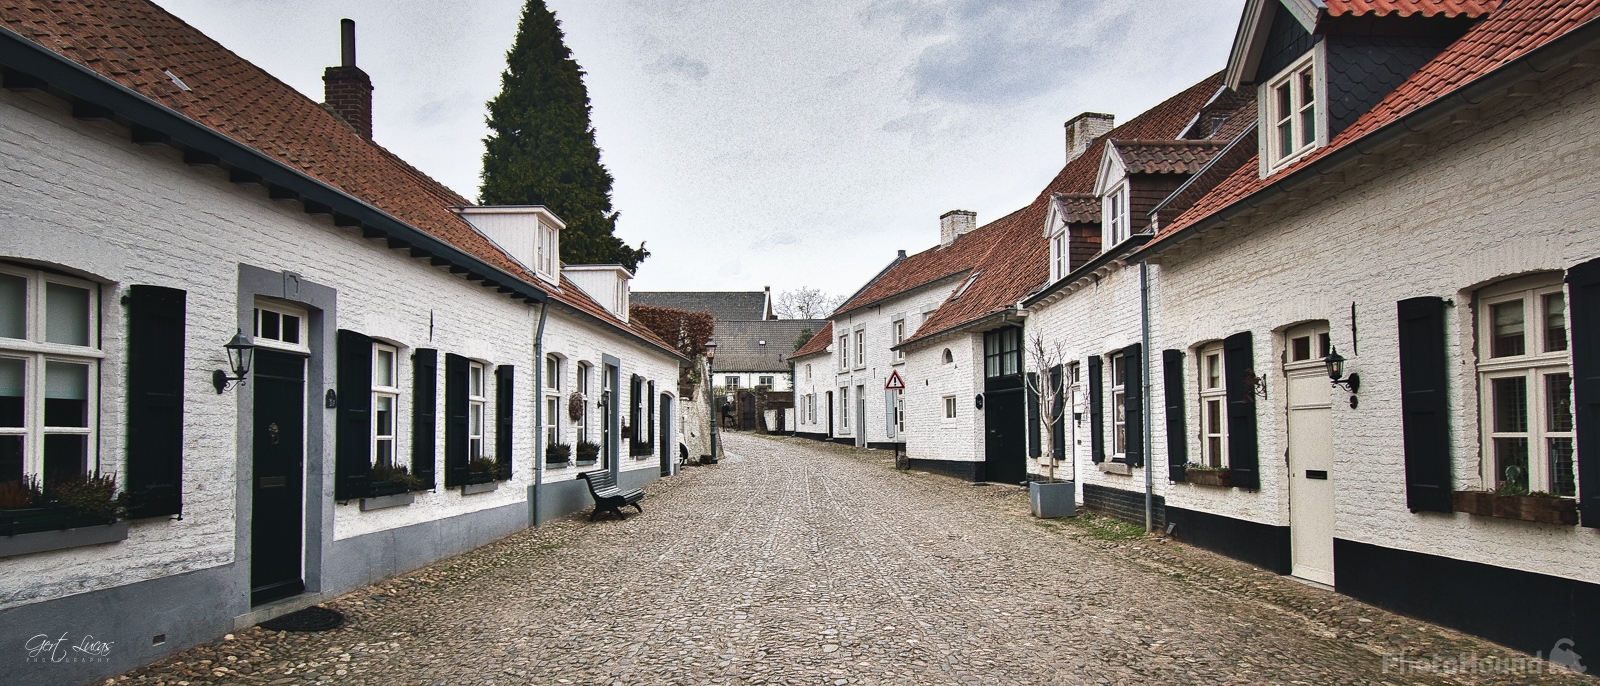 Image of Thorn - The White Village - Beekstraat by Gert Lucas